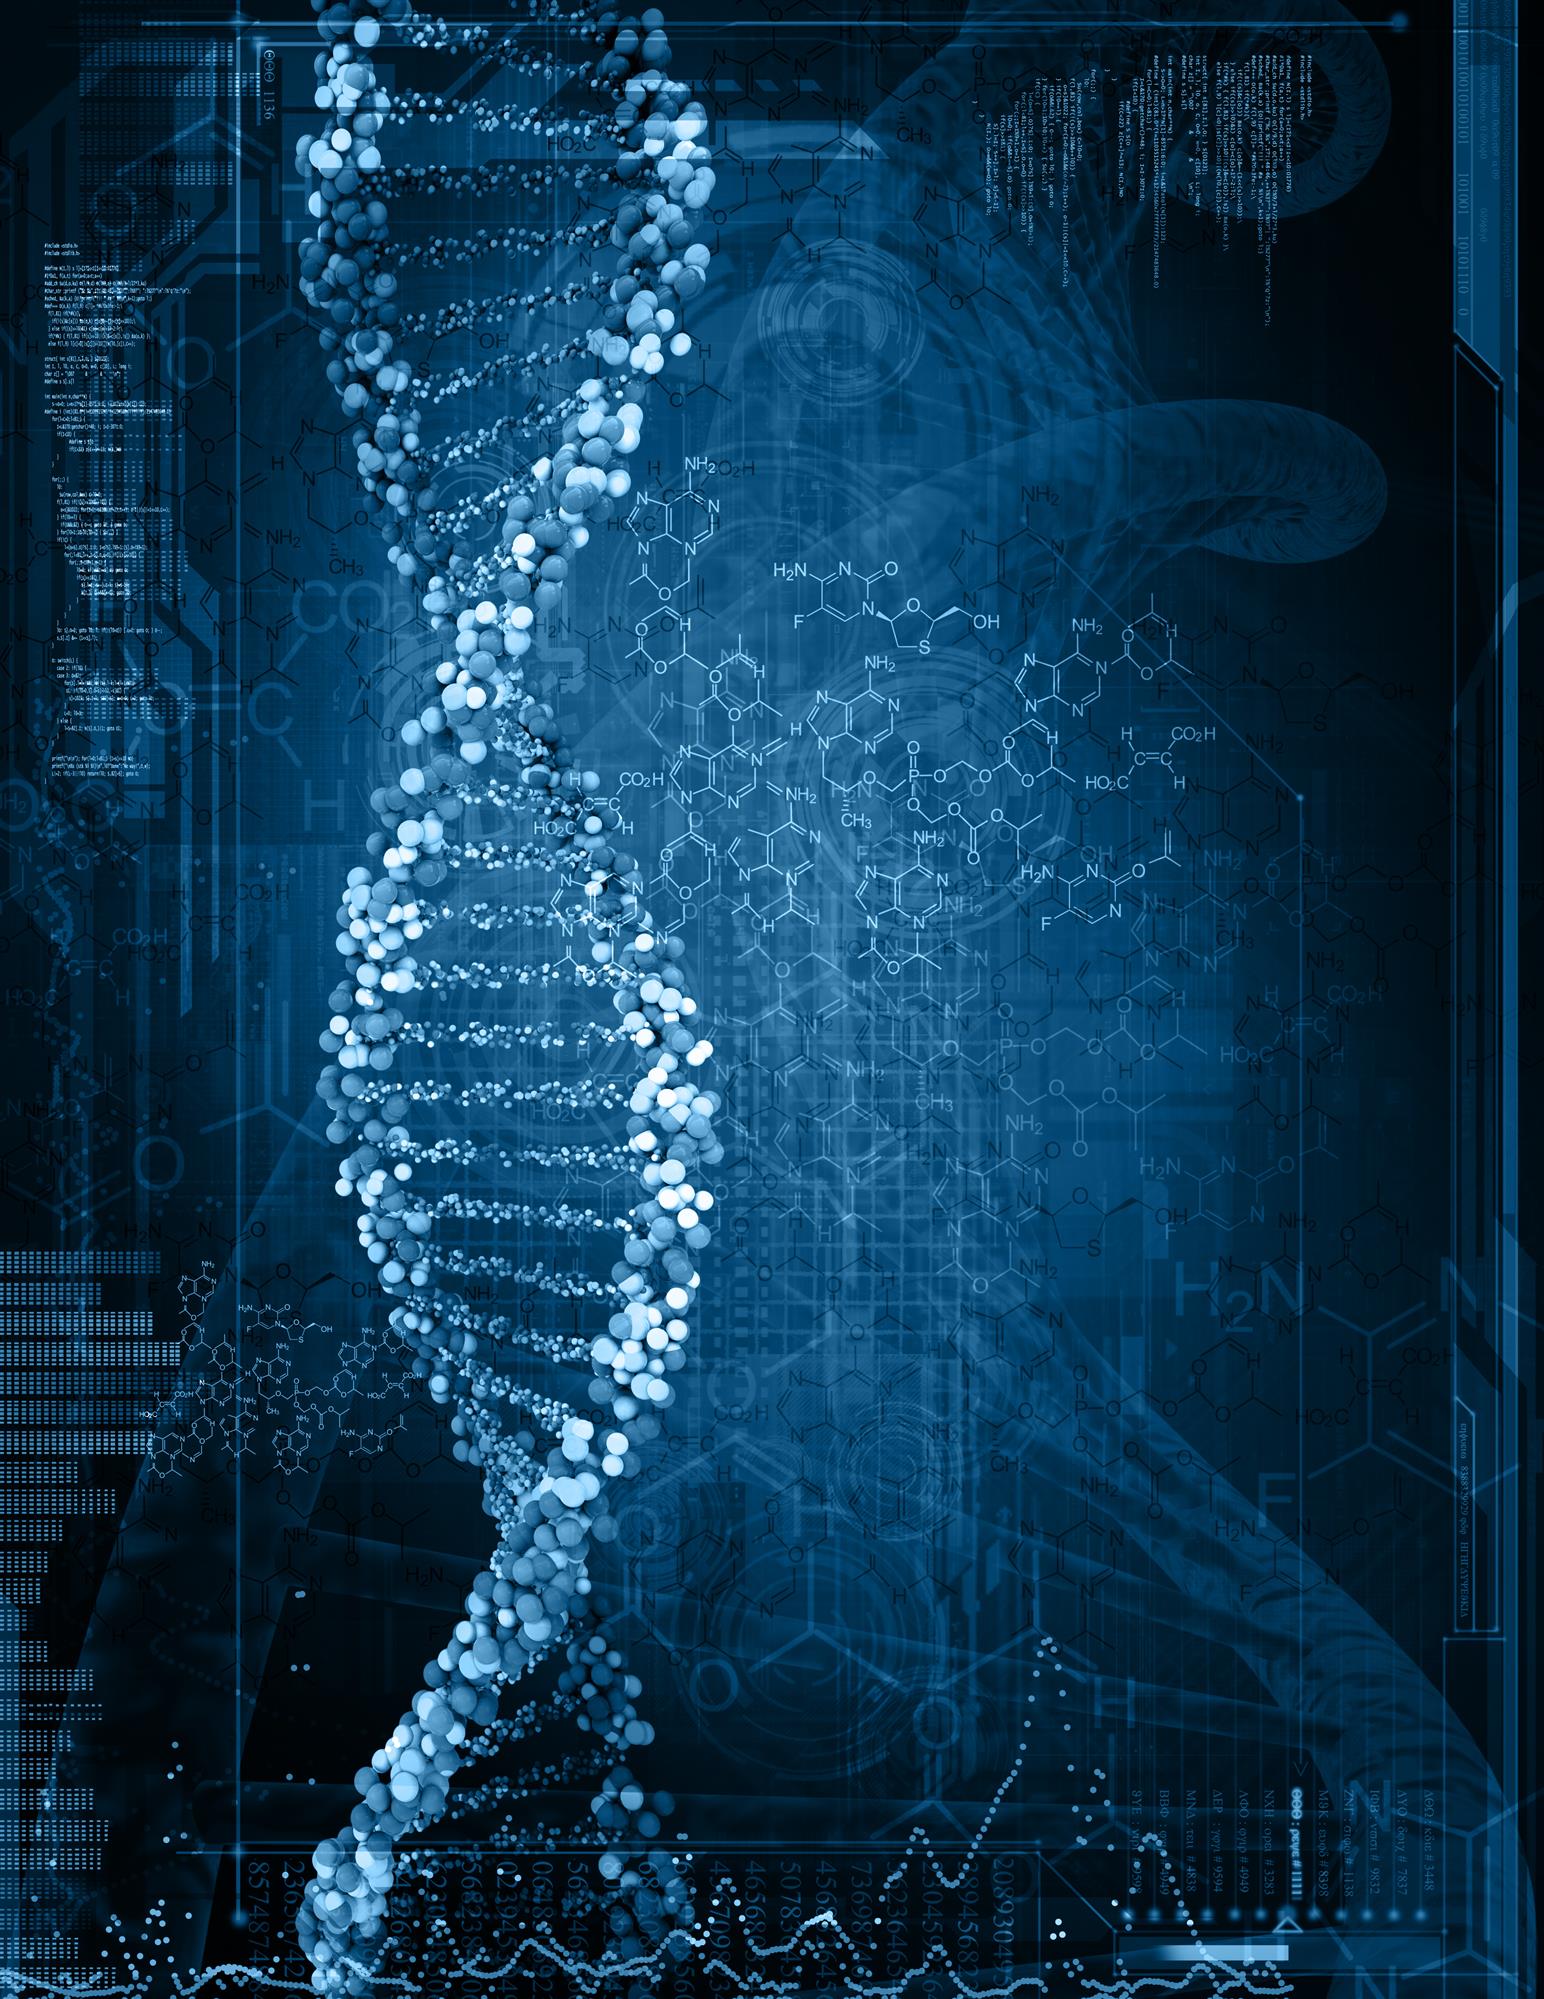 IVY MAGAZINE: Genetic Engineering & The Future